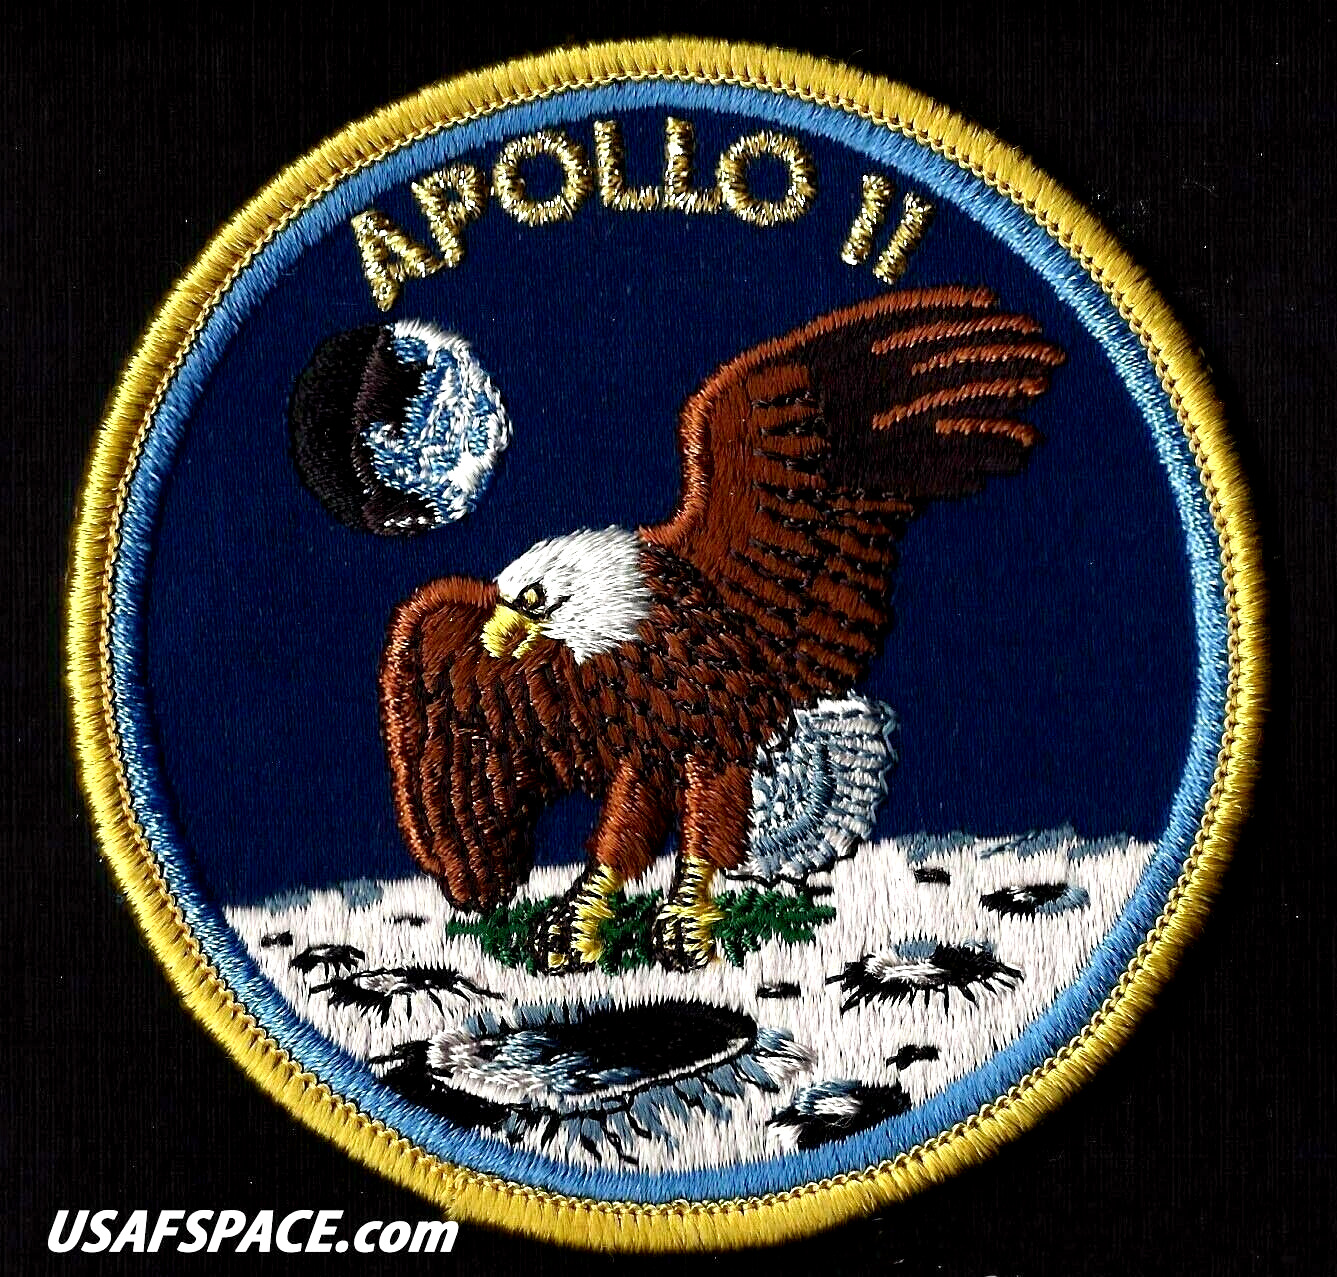 RARE APOLLO 11 LION BROTHERS VINTAGE ORIGINAL NASA CLOTH BACK SPACE PATCH